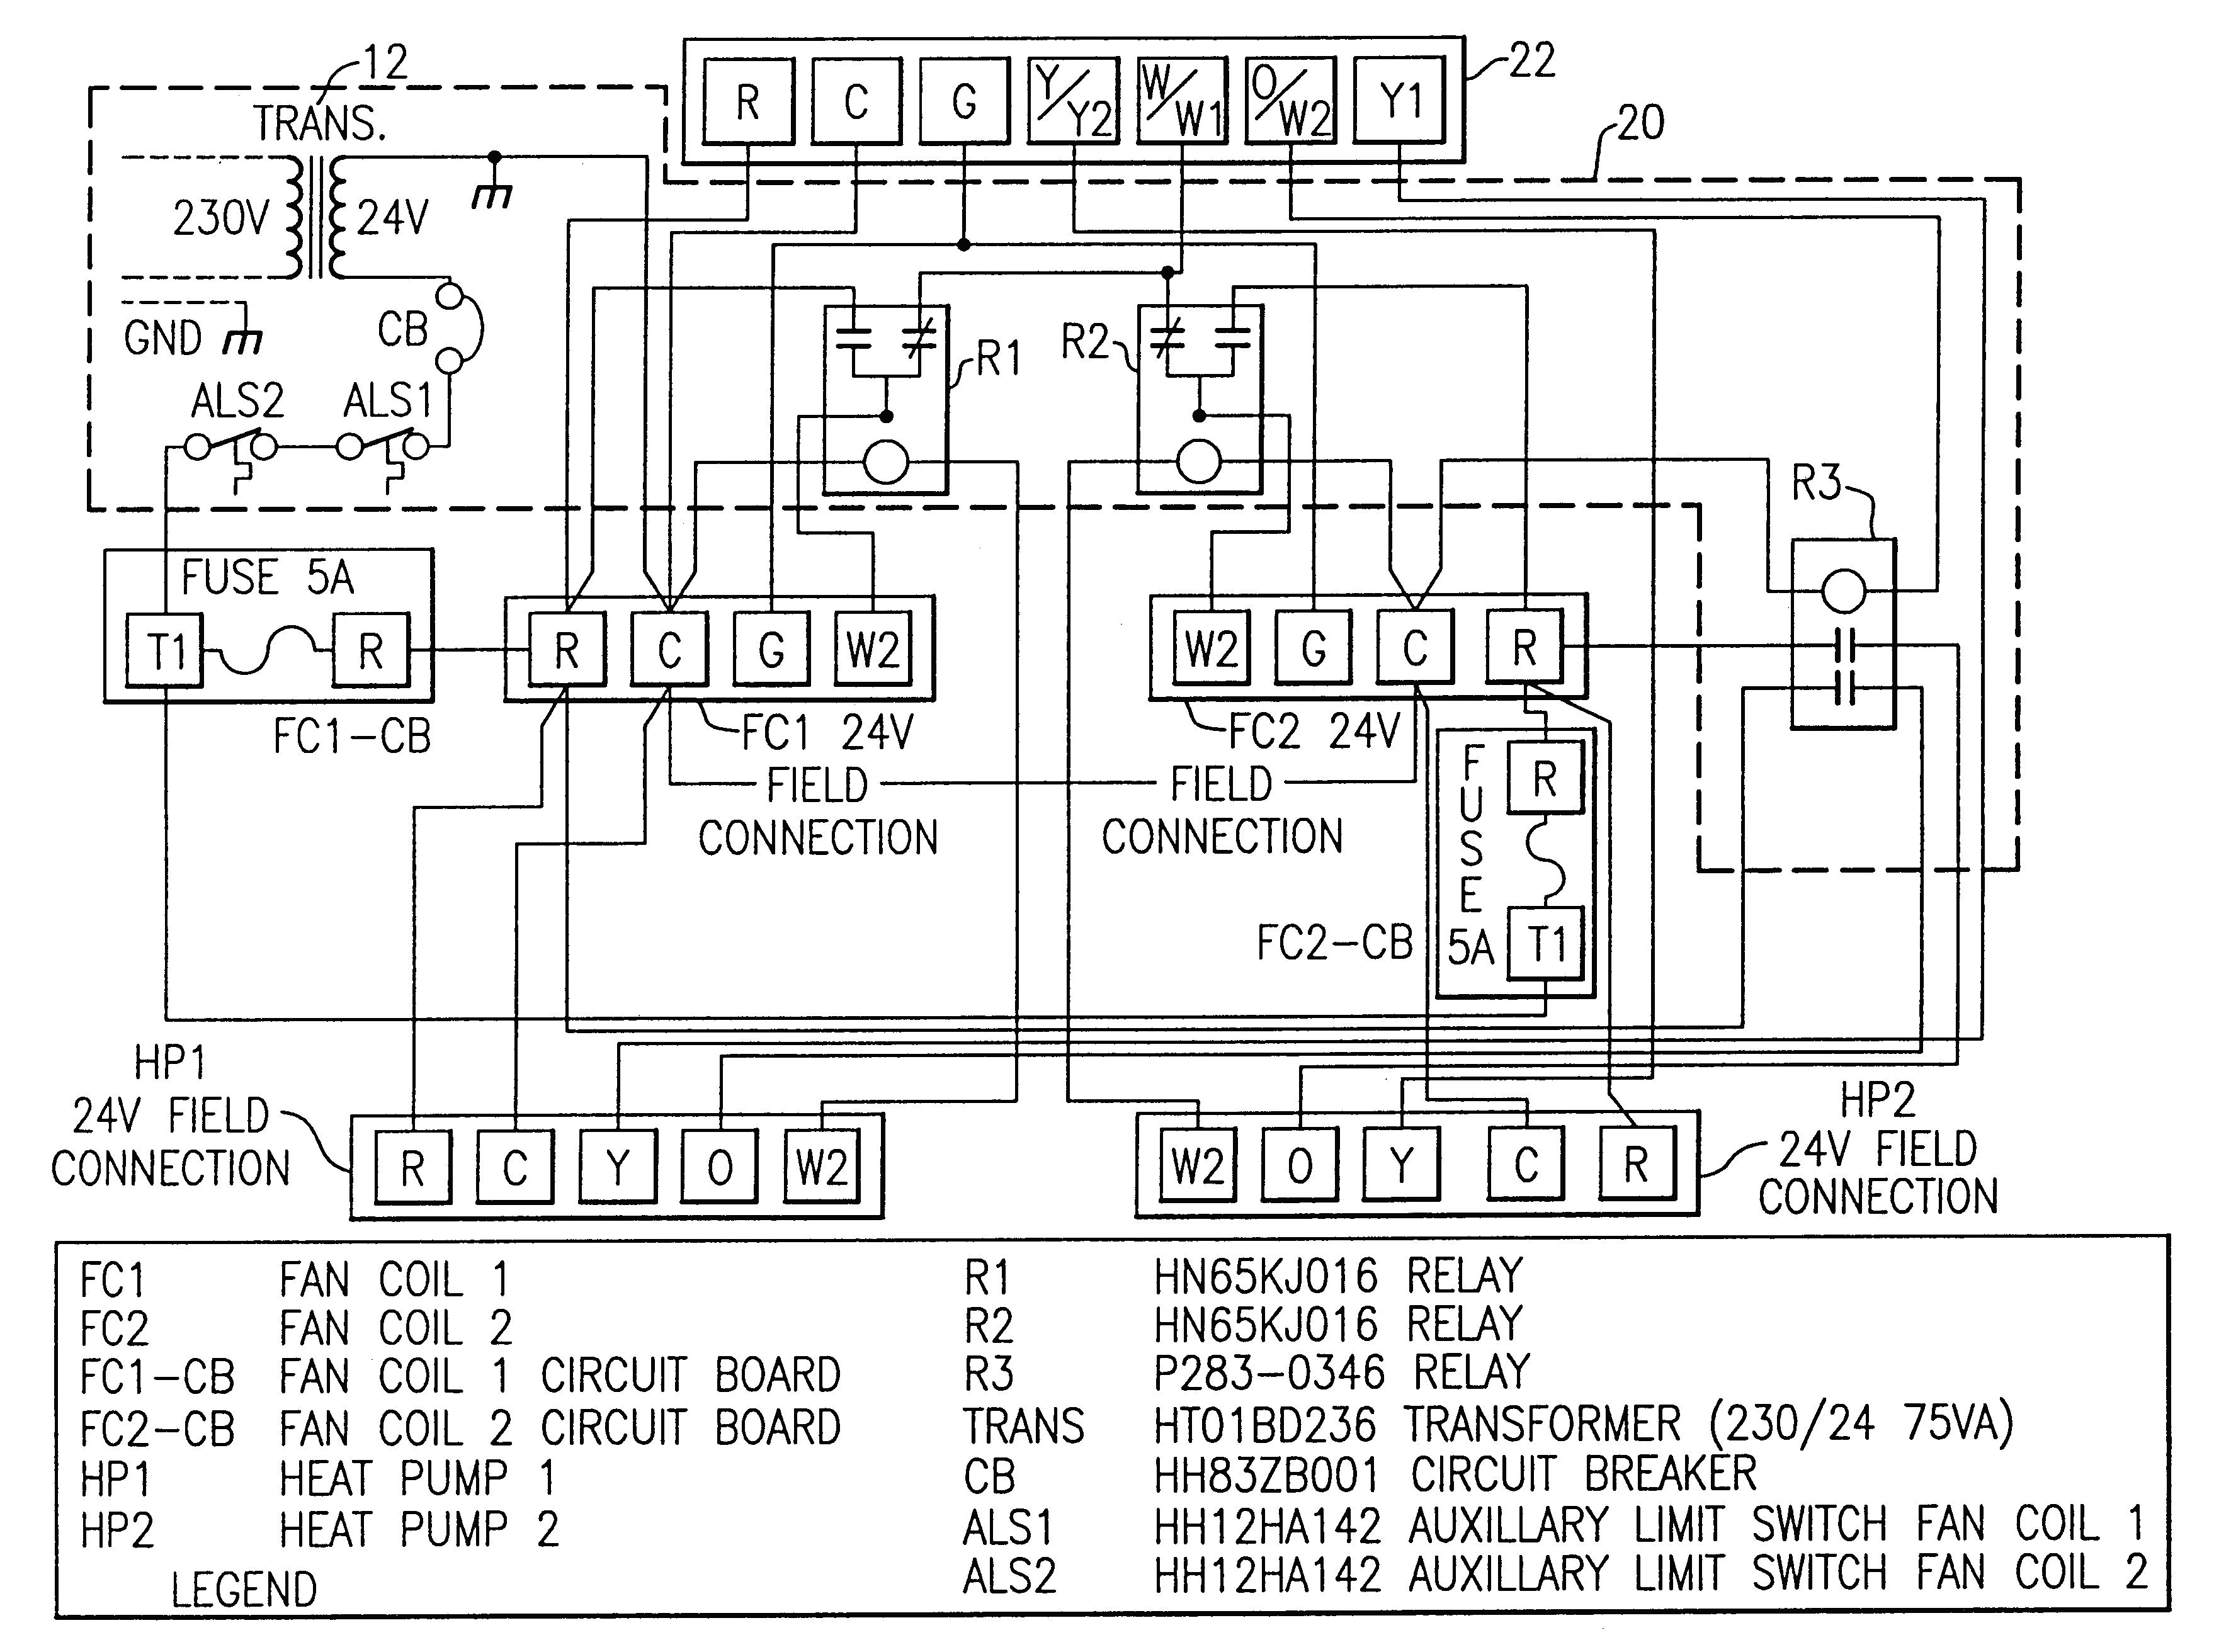 Rheem Hvac Wiring Diagram Valid Rheem Ac Wiring Diagram New Goodman Heat Pump Wire Colors thermostat